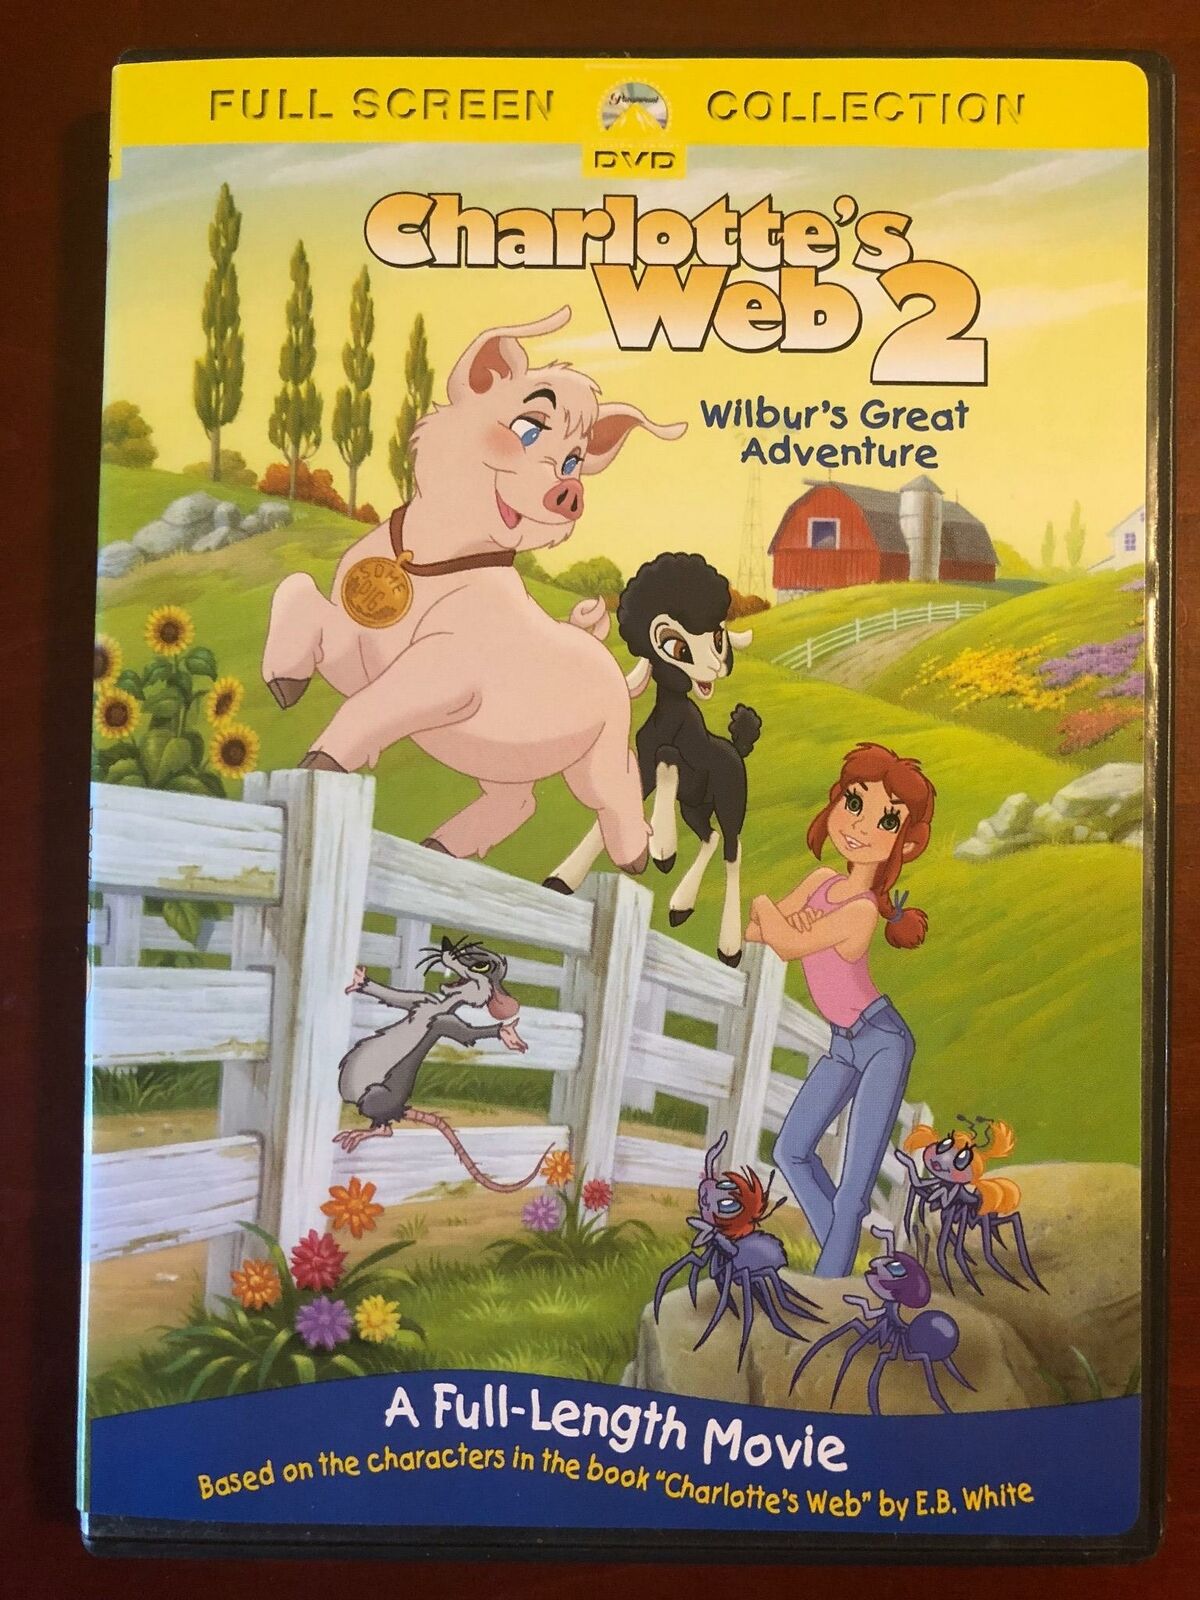 Charlottes Web 2 - Wilburs Great Adventure (DVD, 2003, full screen) - H0828